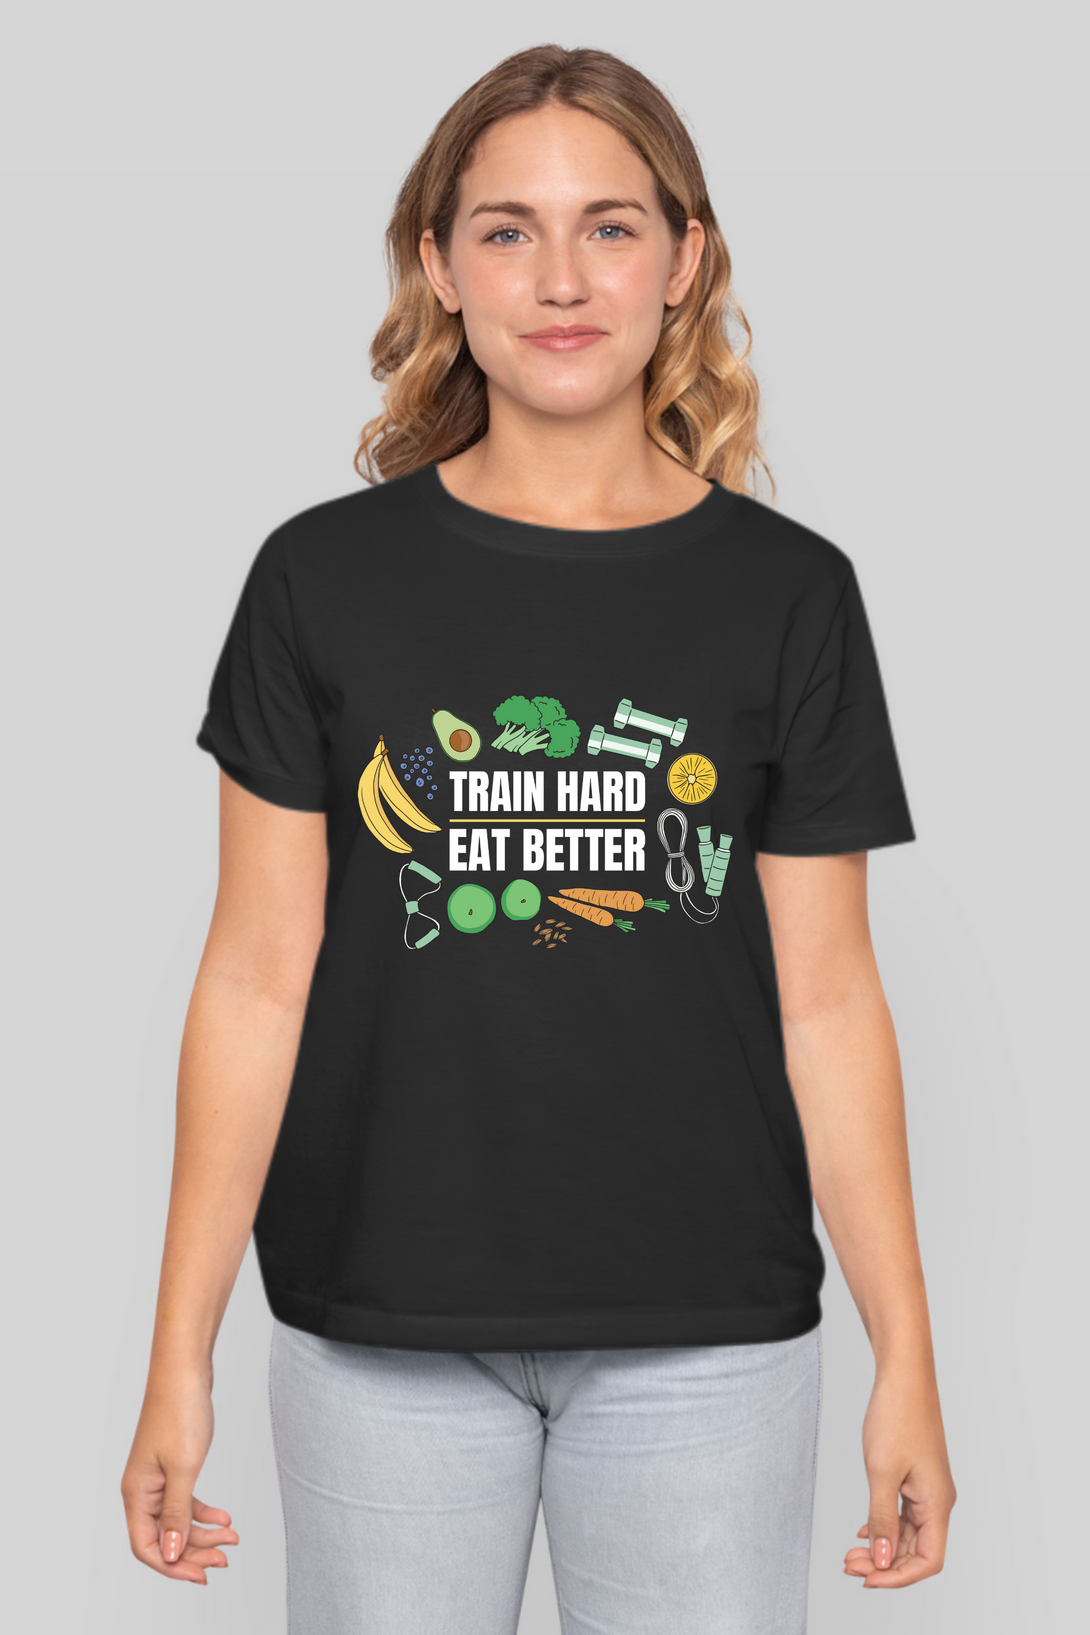 Train Hard, Eat Better Printed T-Shirt For Women - WowWaves - 8